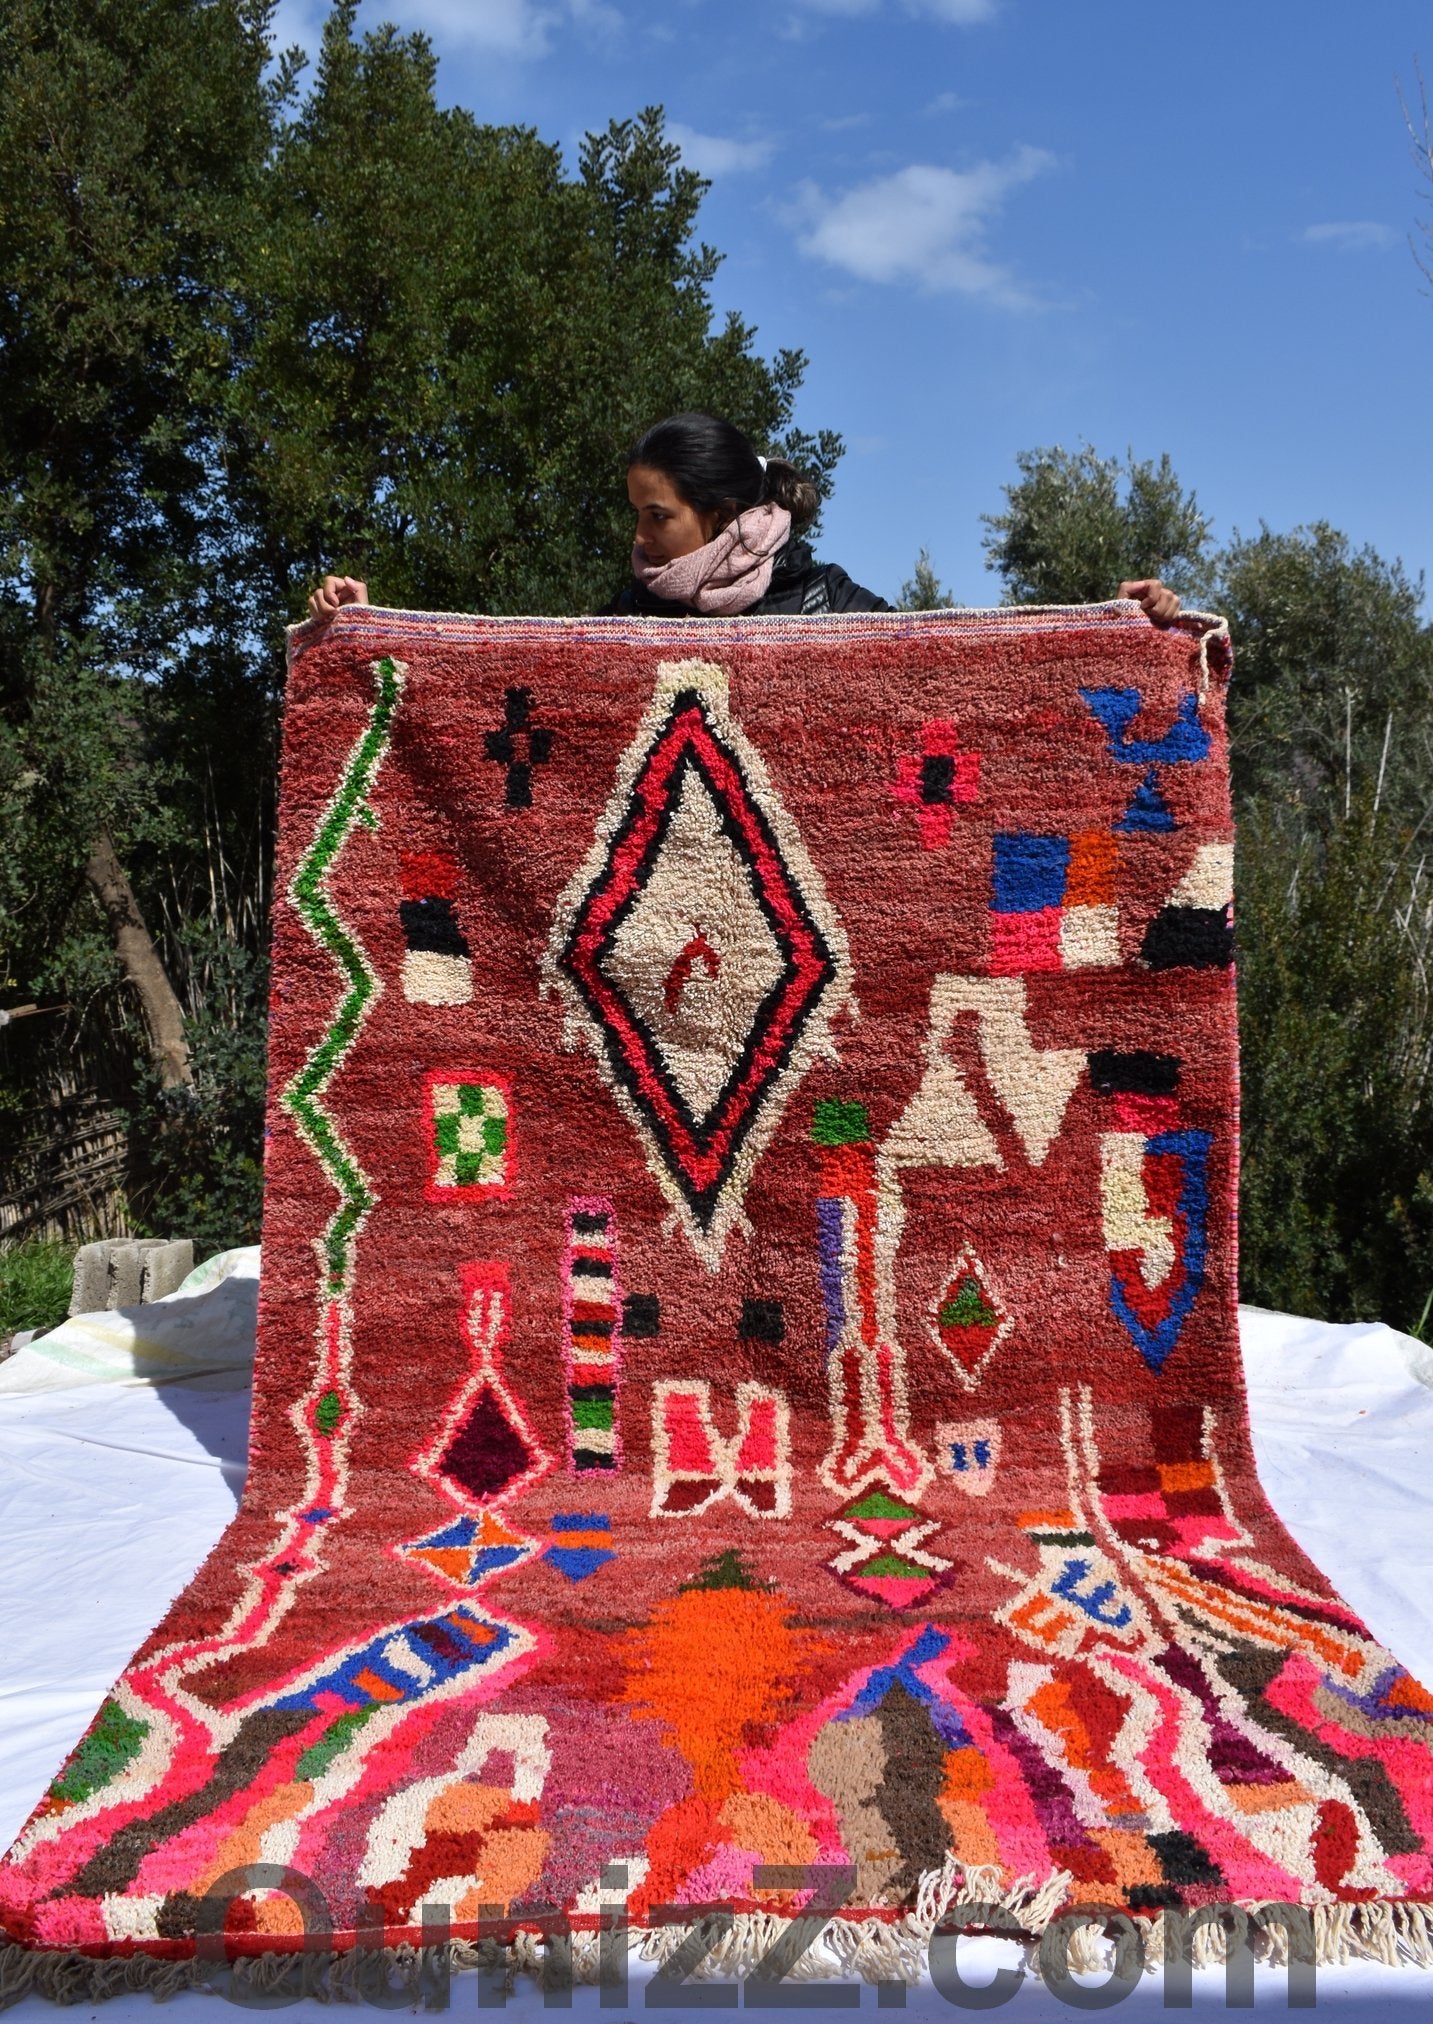 TIWALINE | 9'02x5'12 Ft | 275x156 cm | Moroccan Red Rug | 100% wool handmade - OunizZ